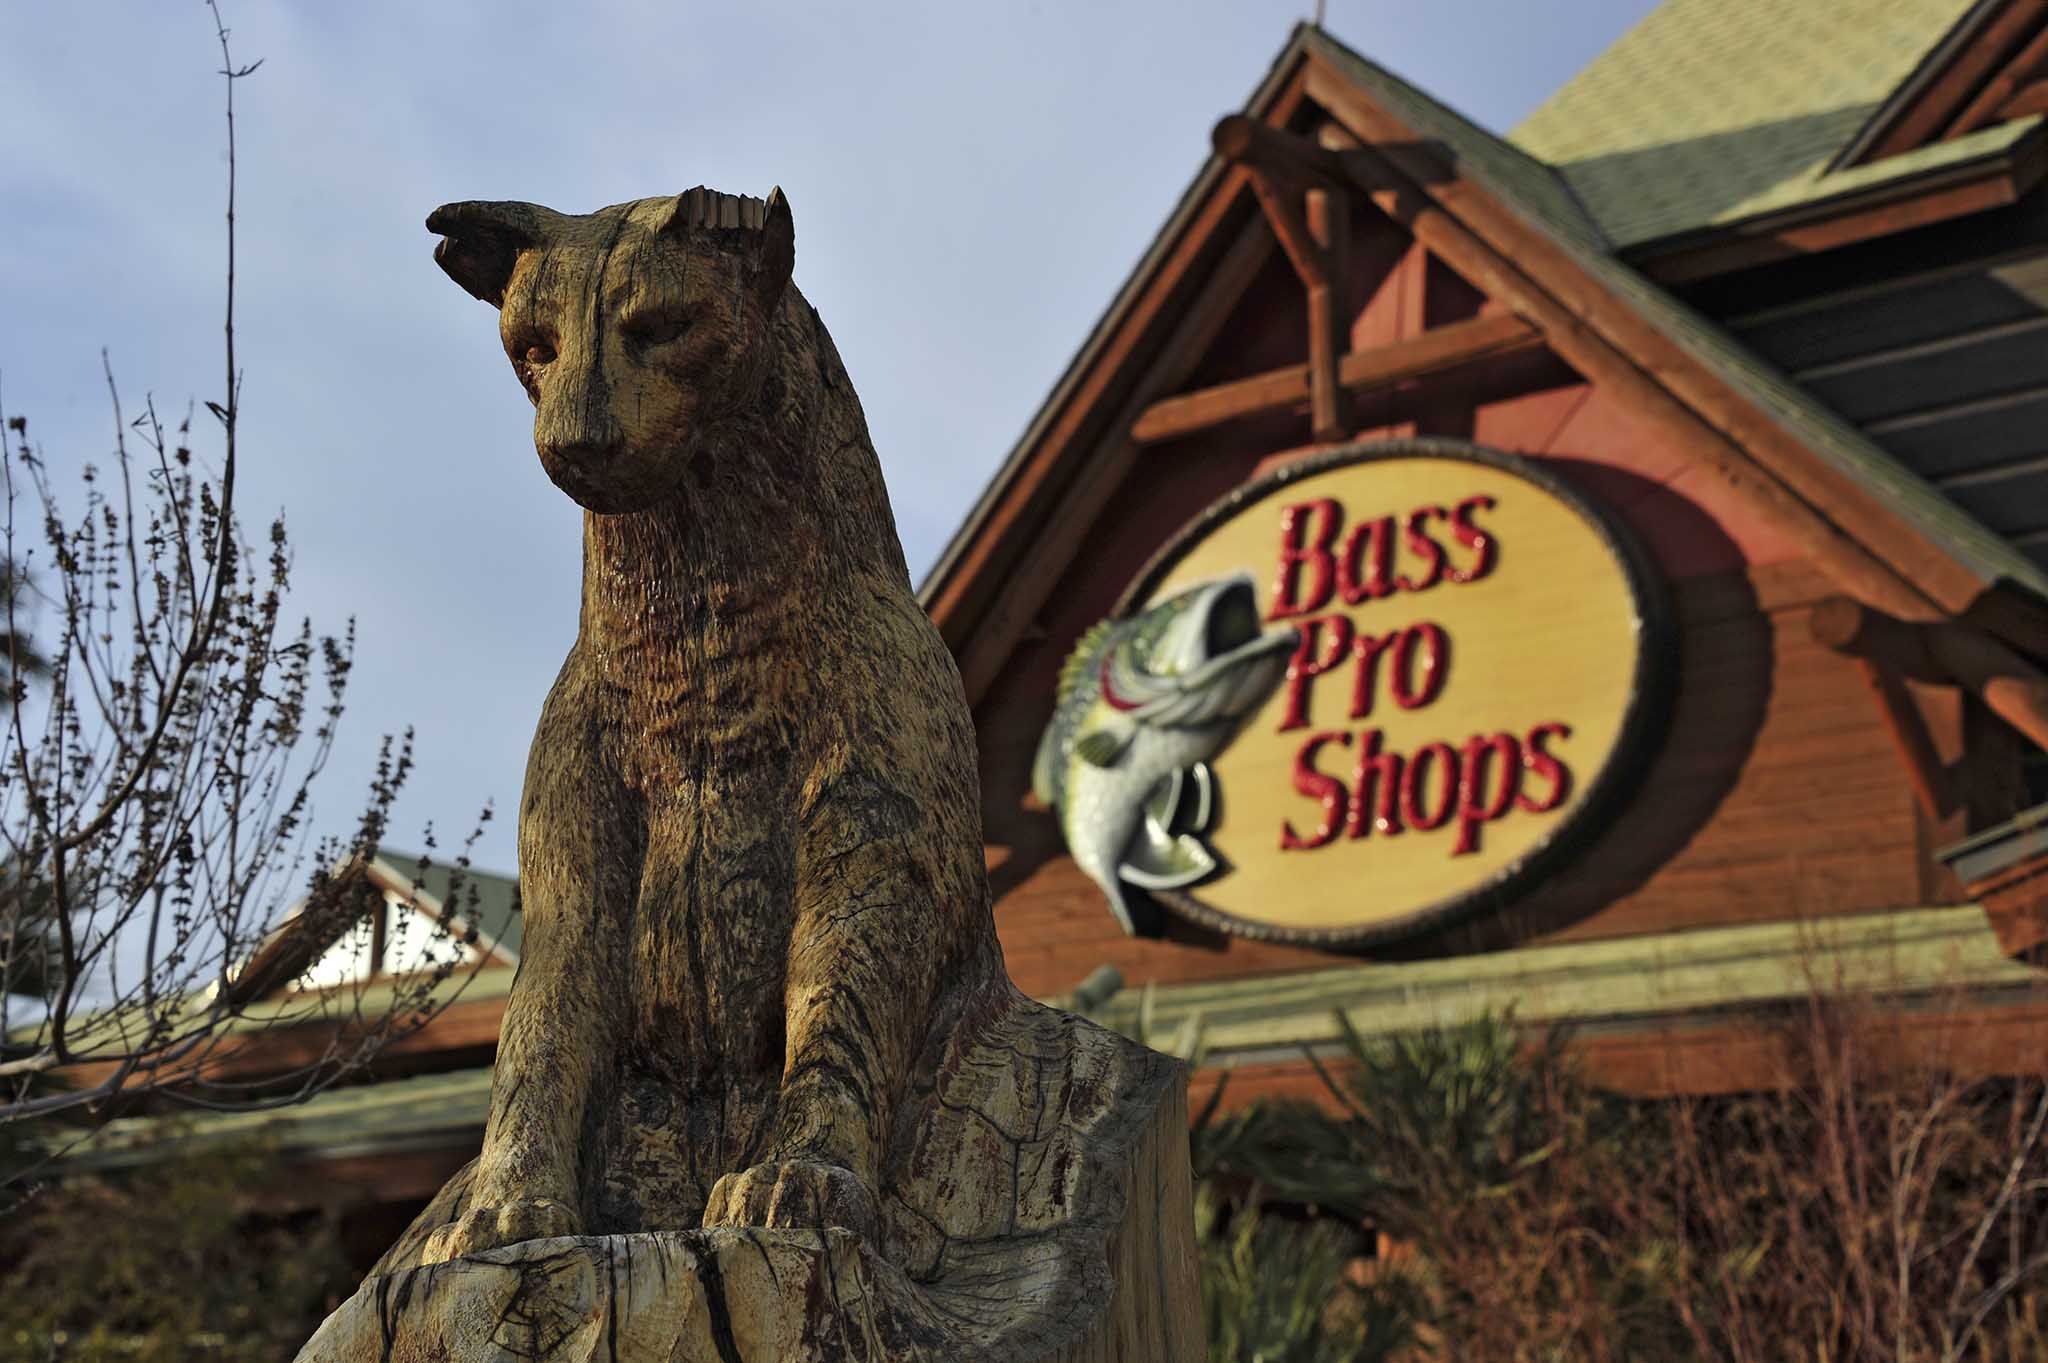 Il Bass Pro Shops - Outdoor World” di Las Vegas